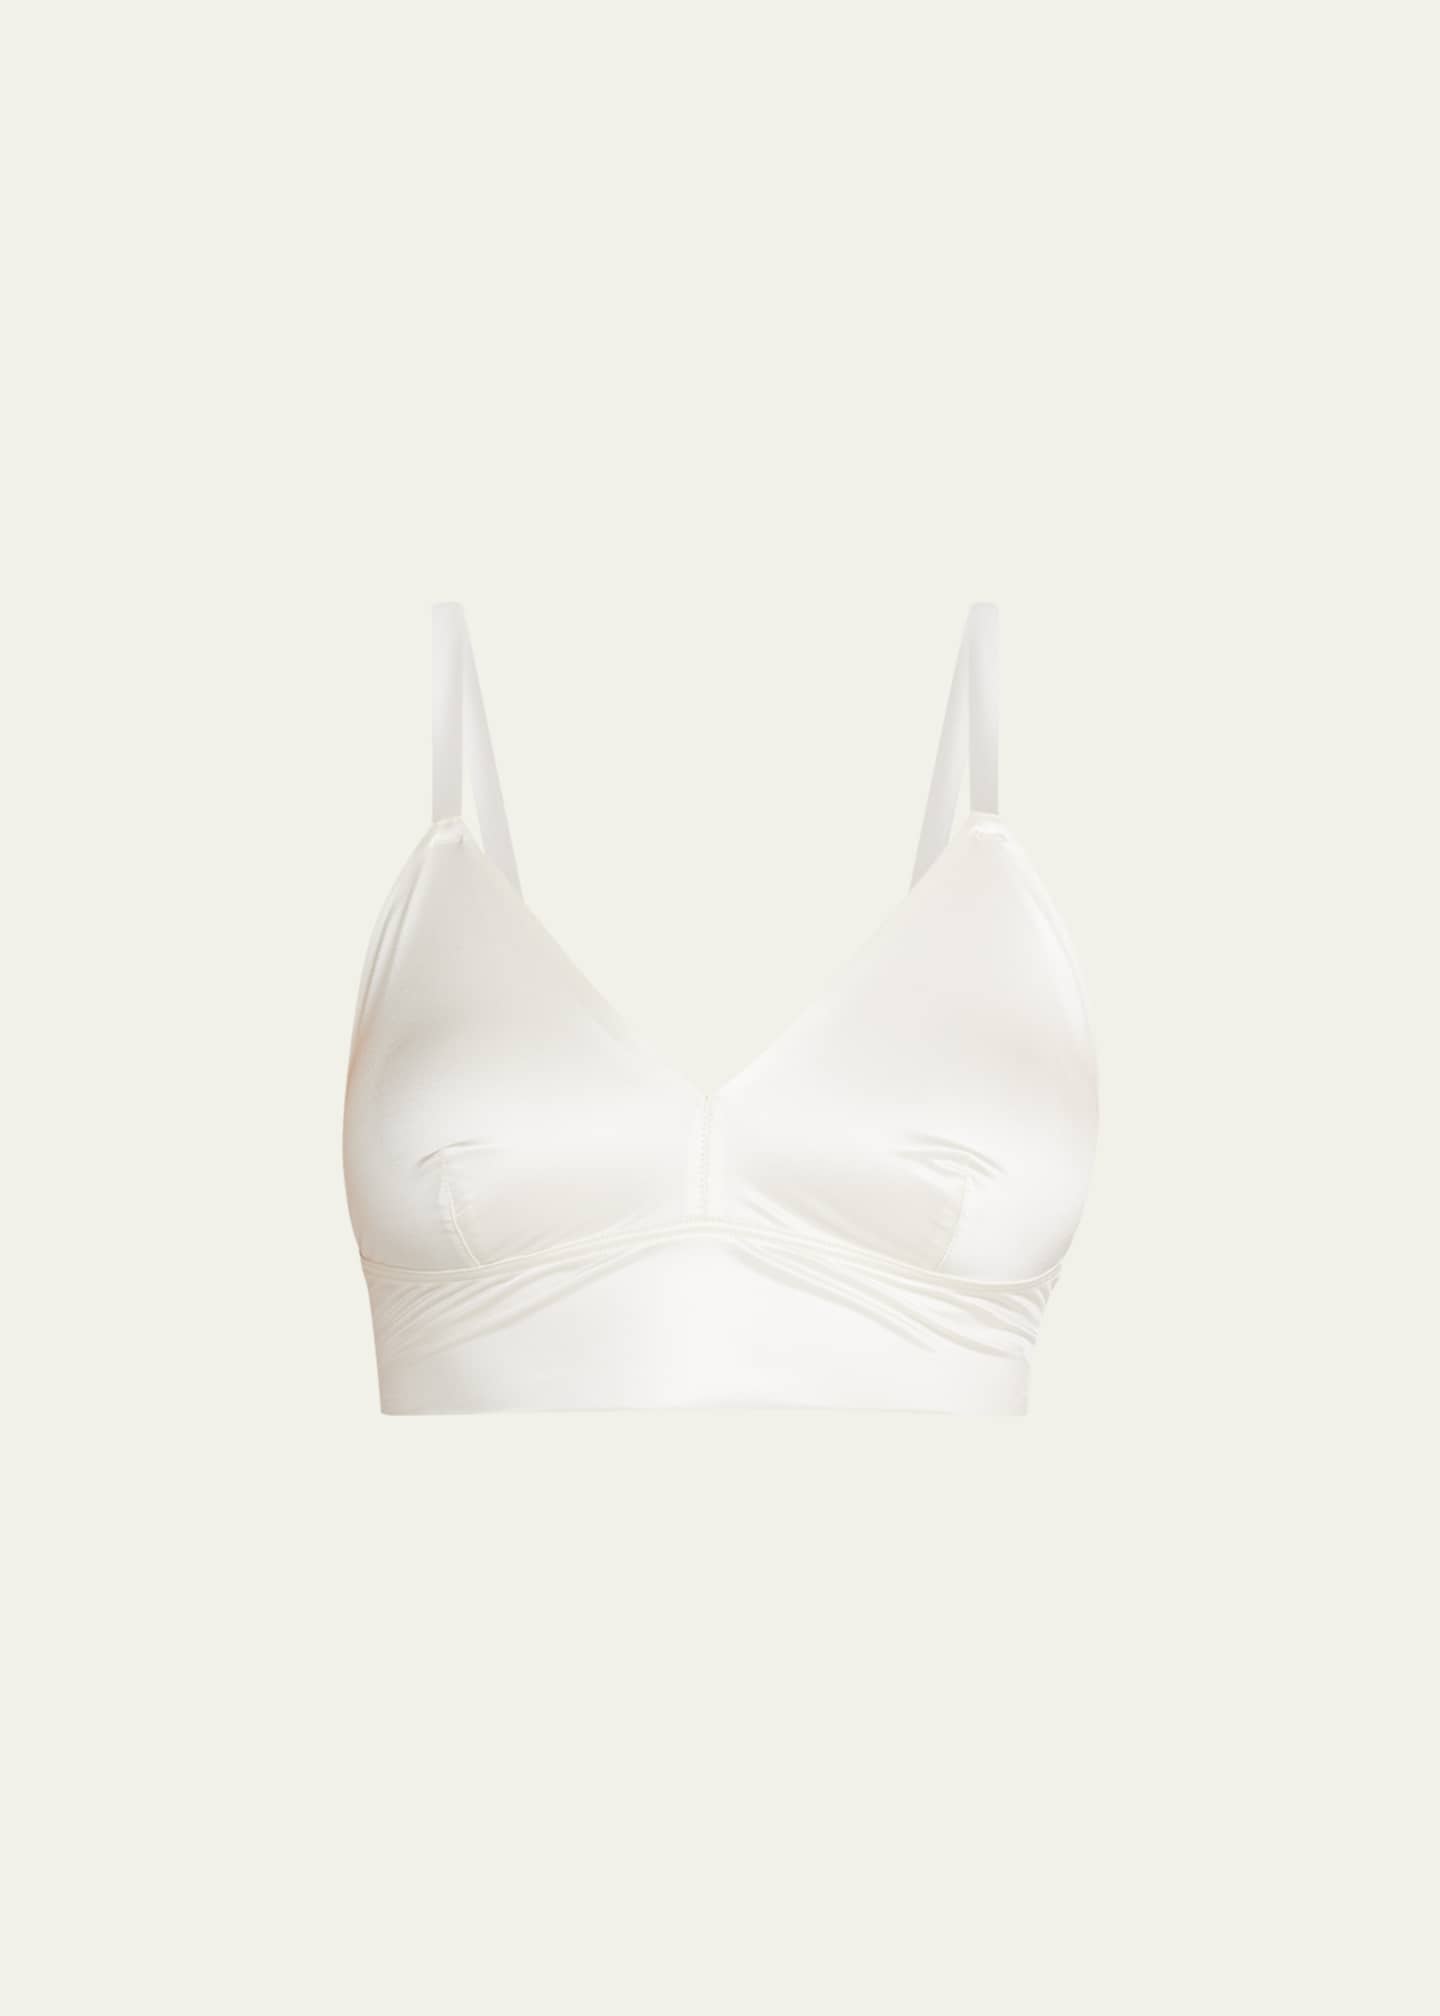 NEW SPANX 'Spotlight on Lace' Bralette Size XS White #10224R $48